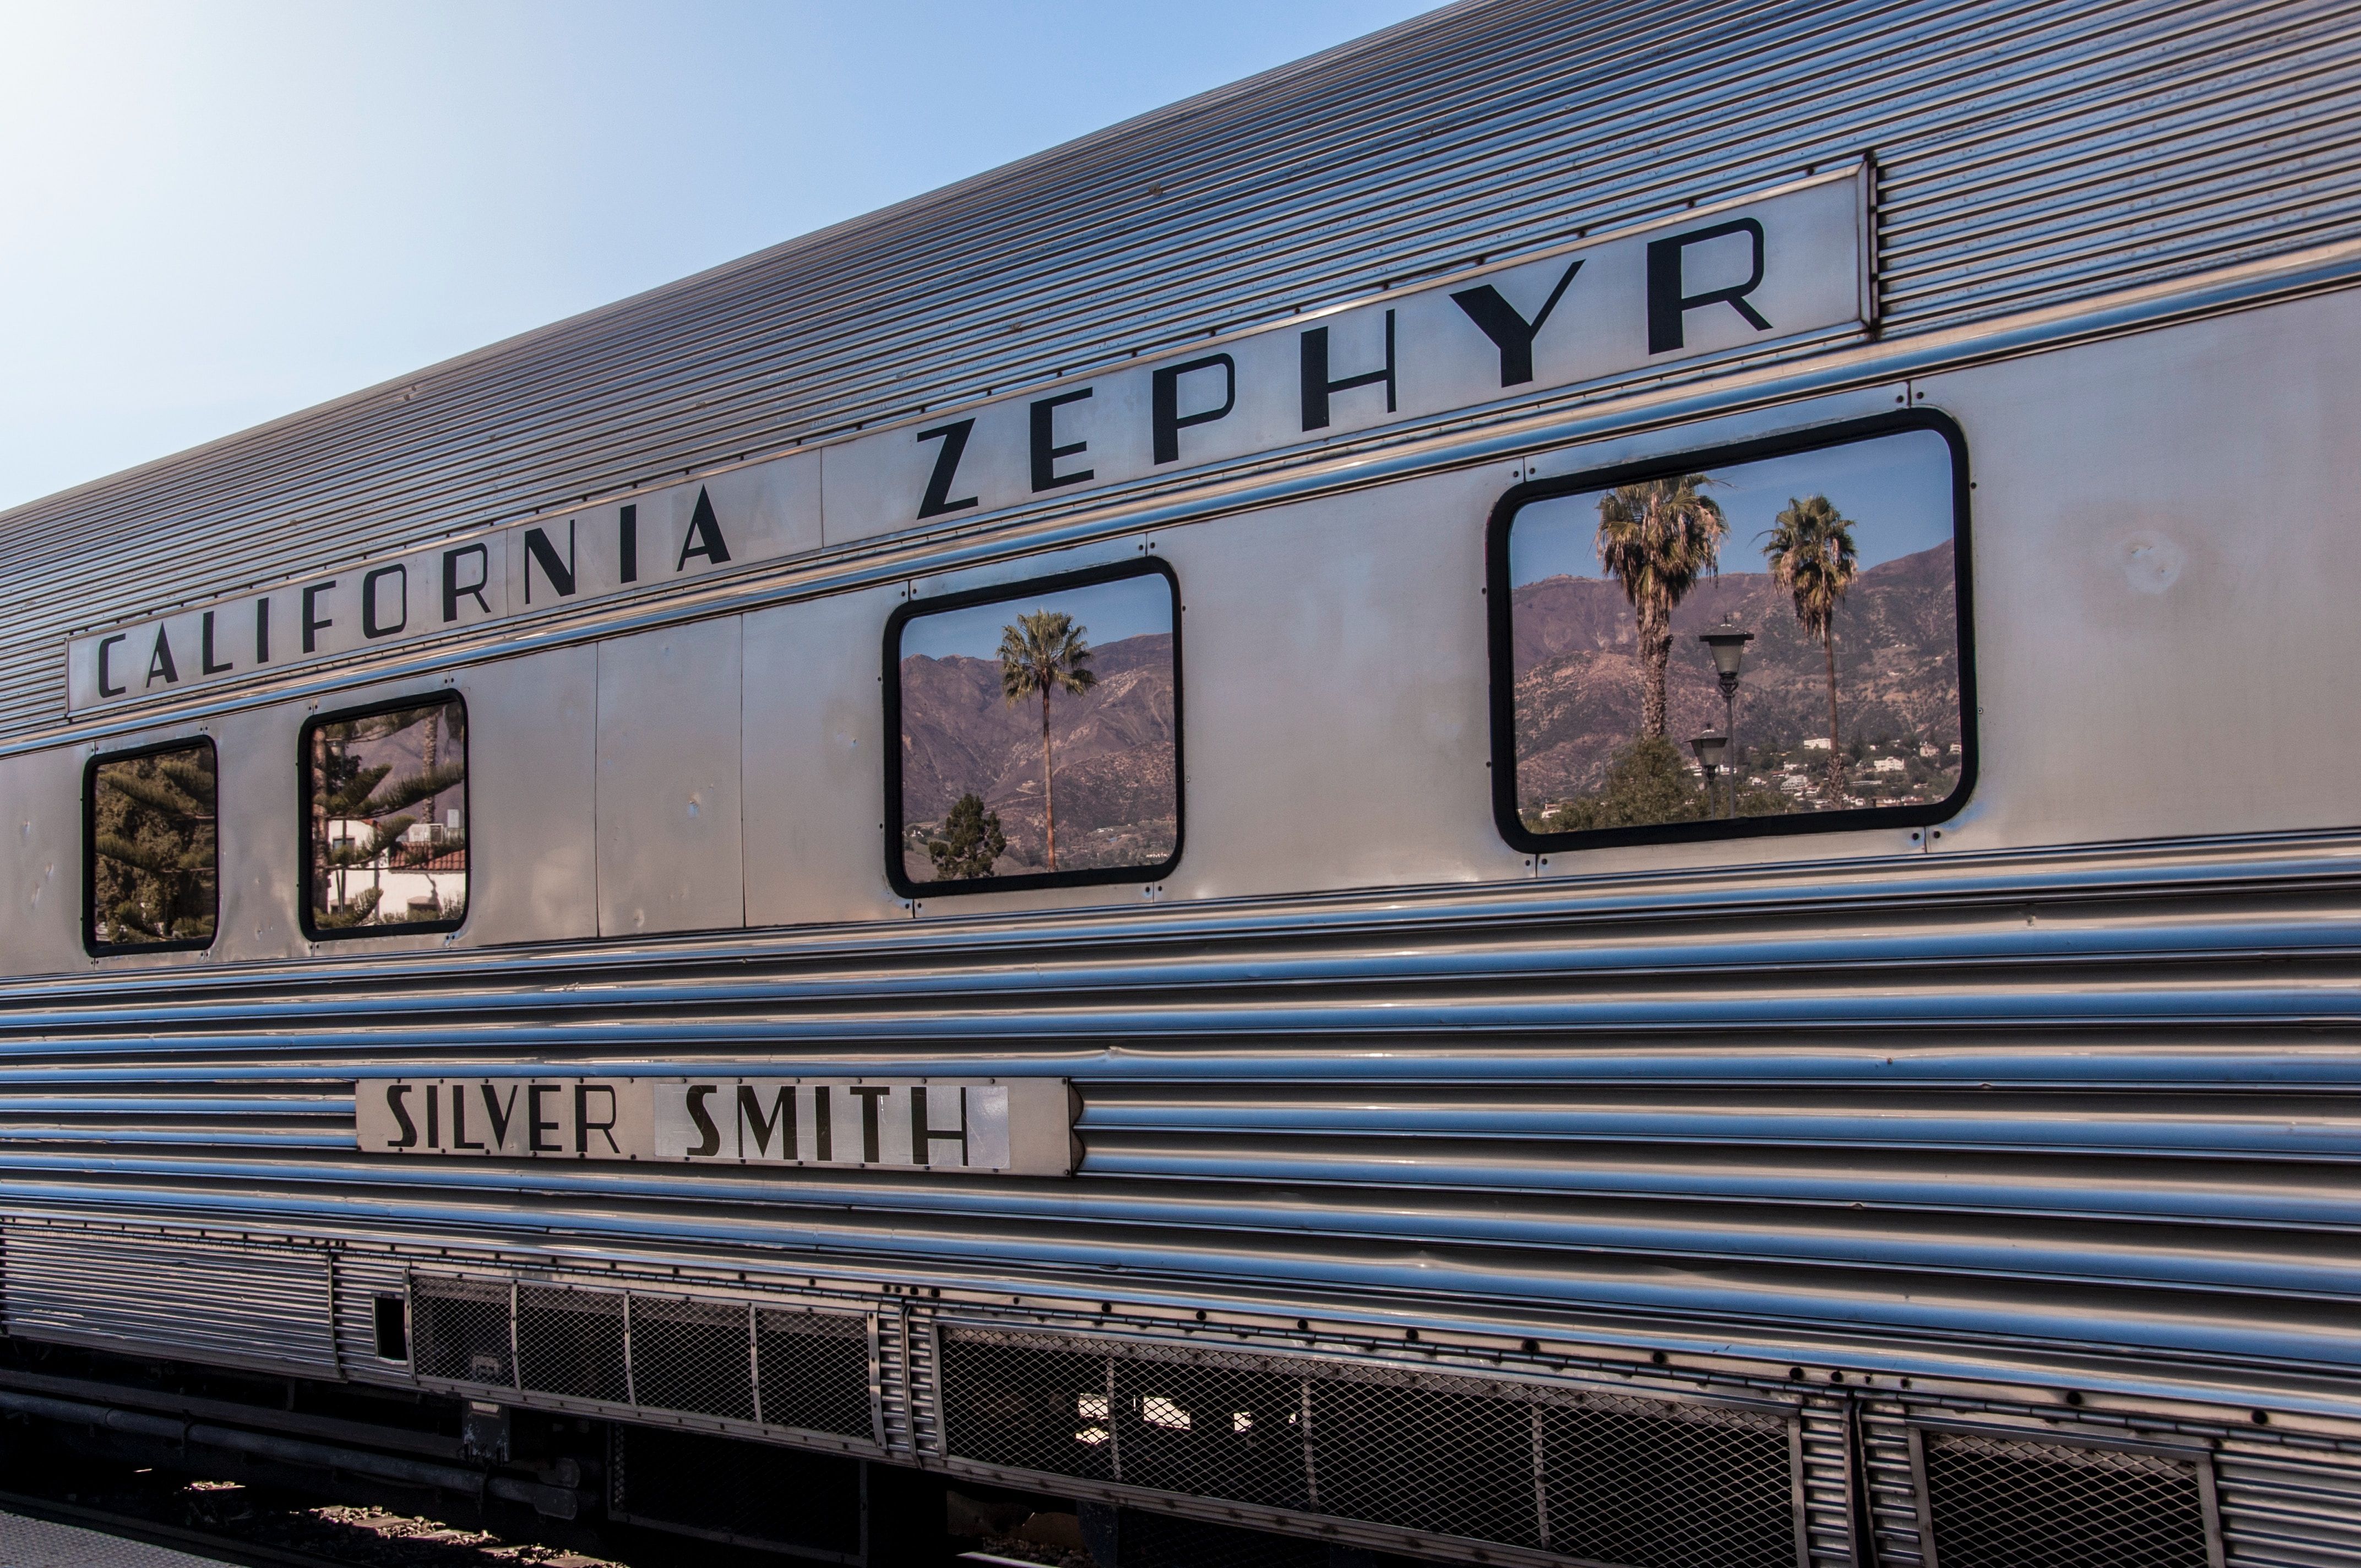 California Zephyr Amtrak